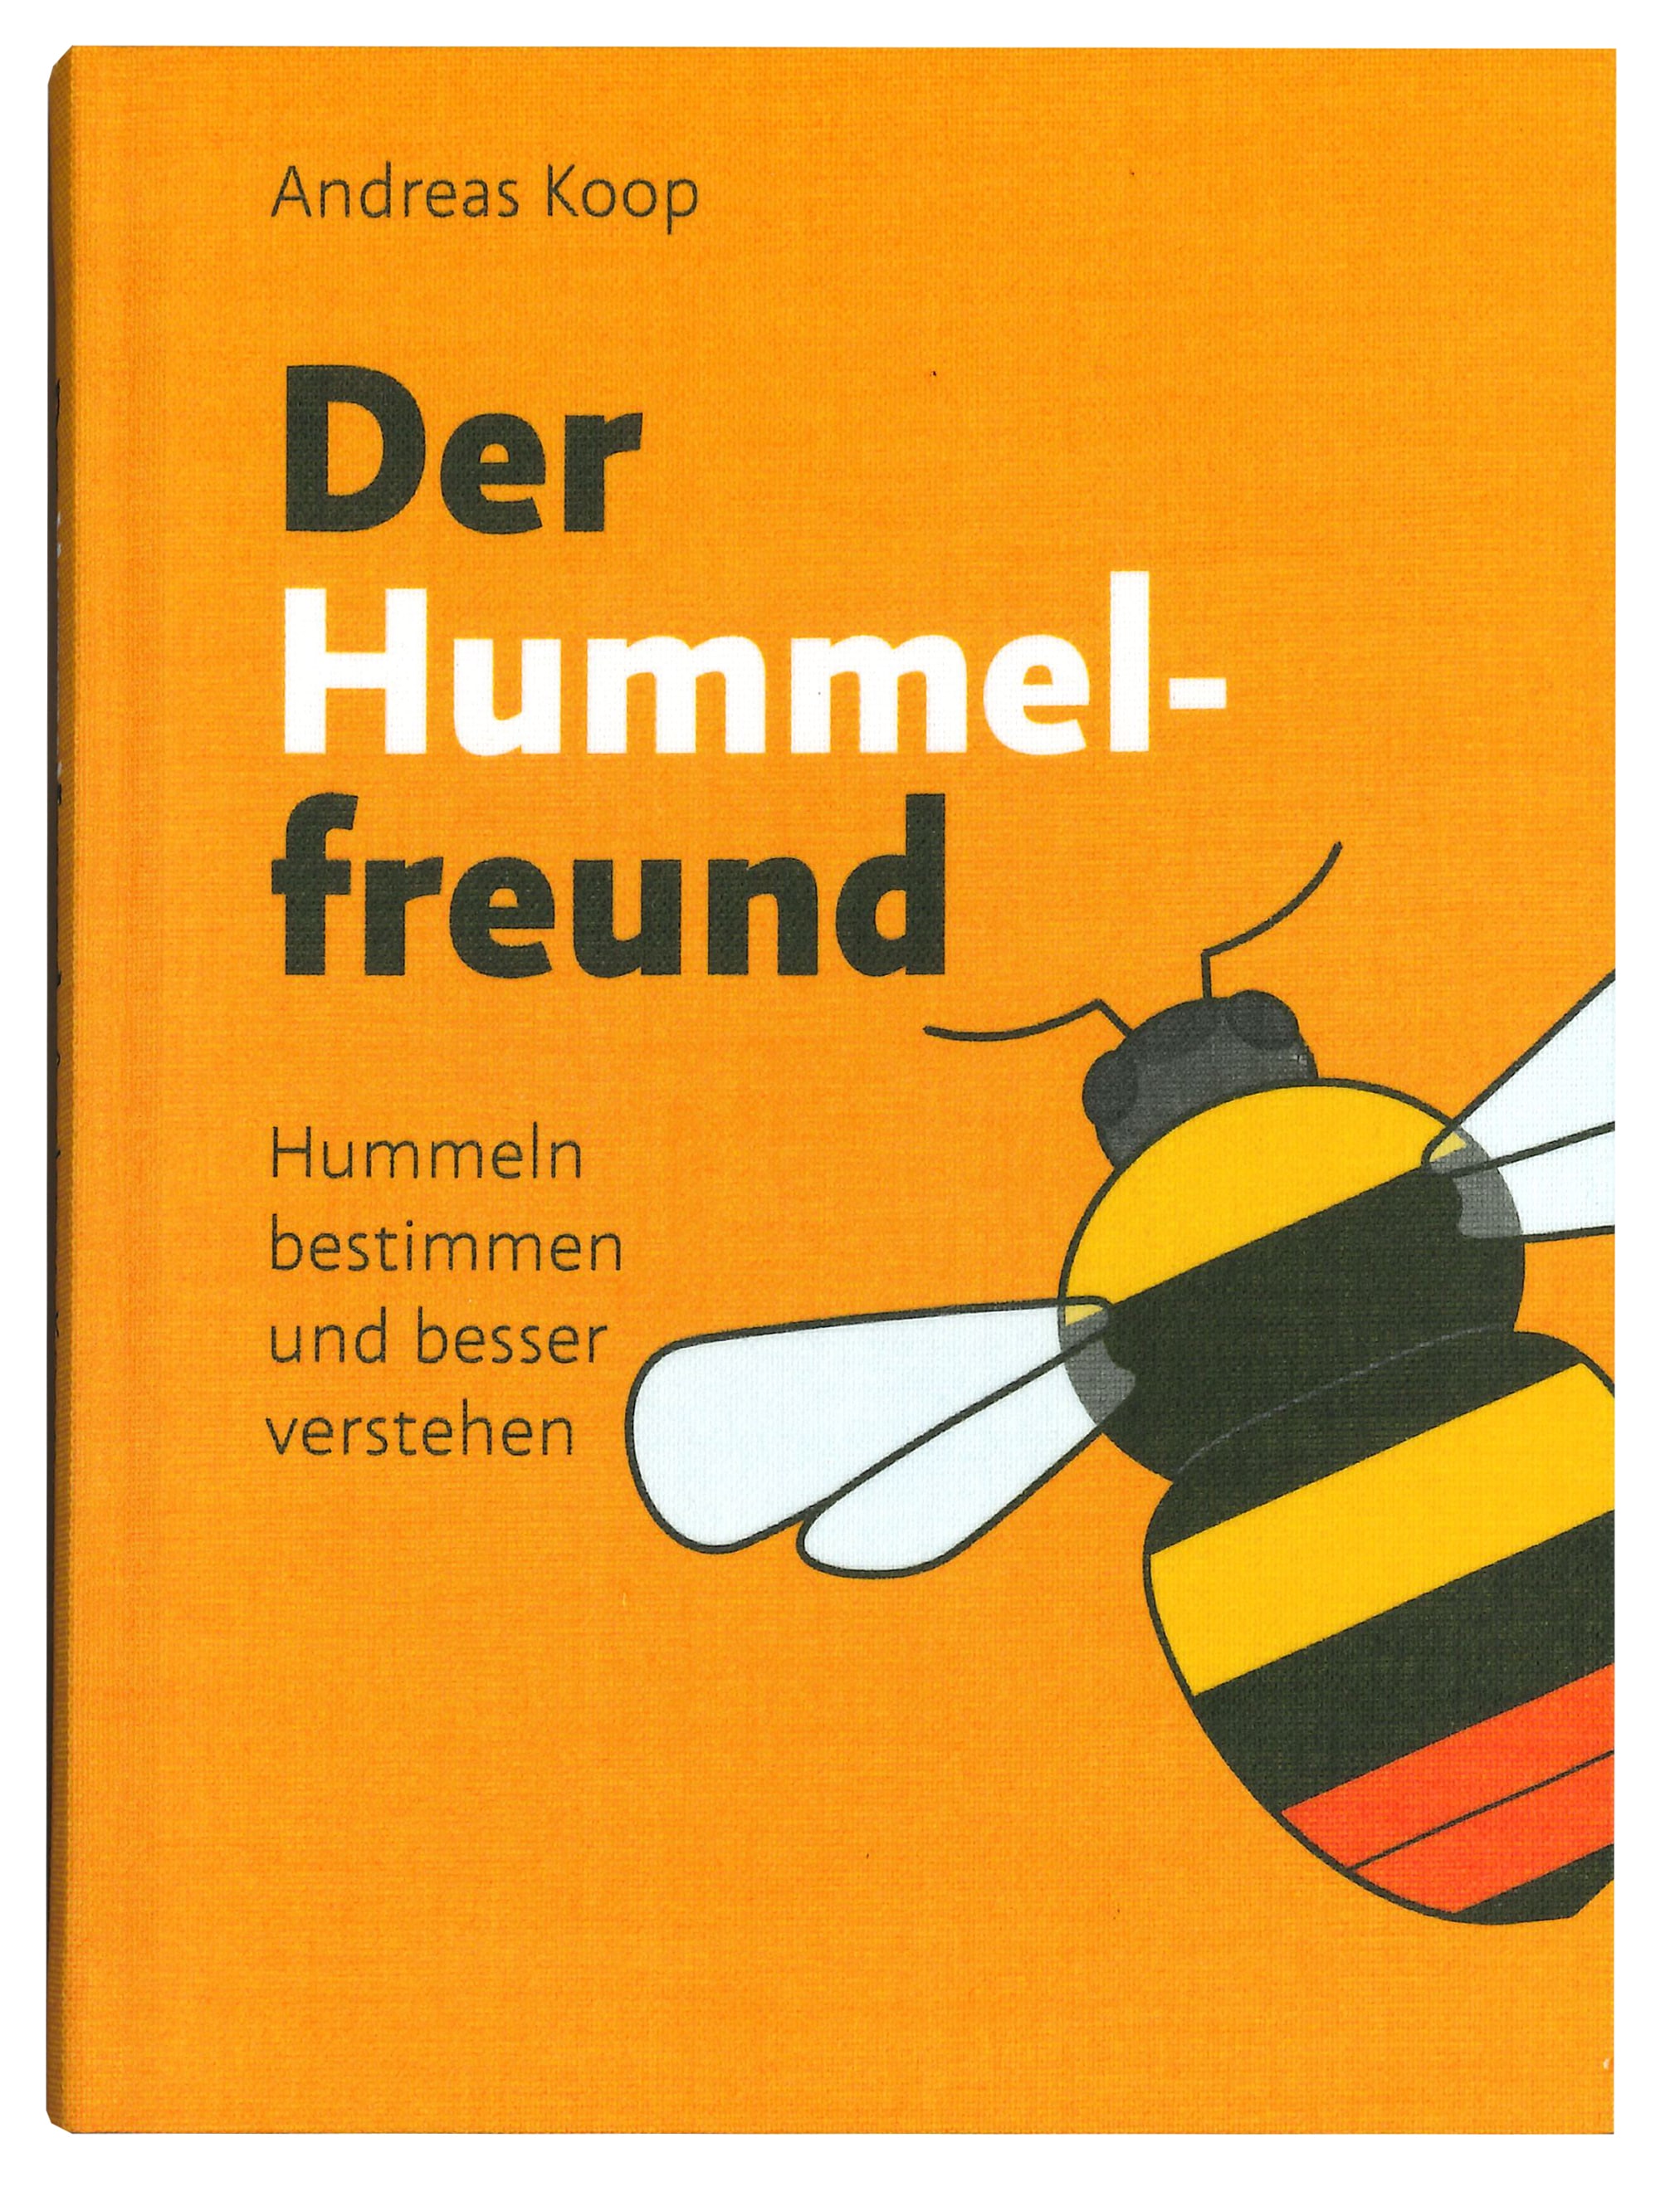 Titelbild_Hummelbuch.jpg